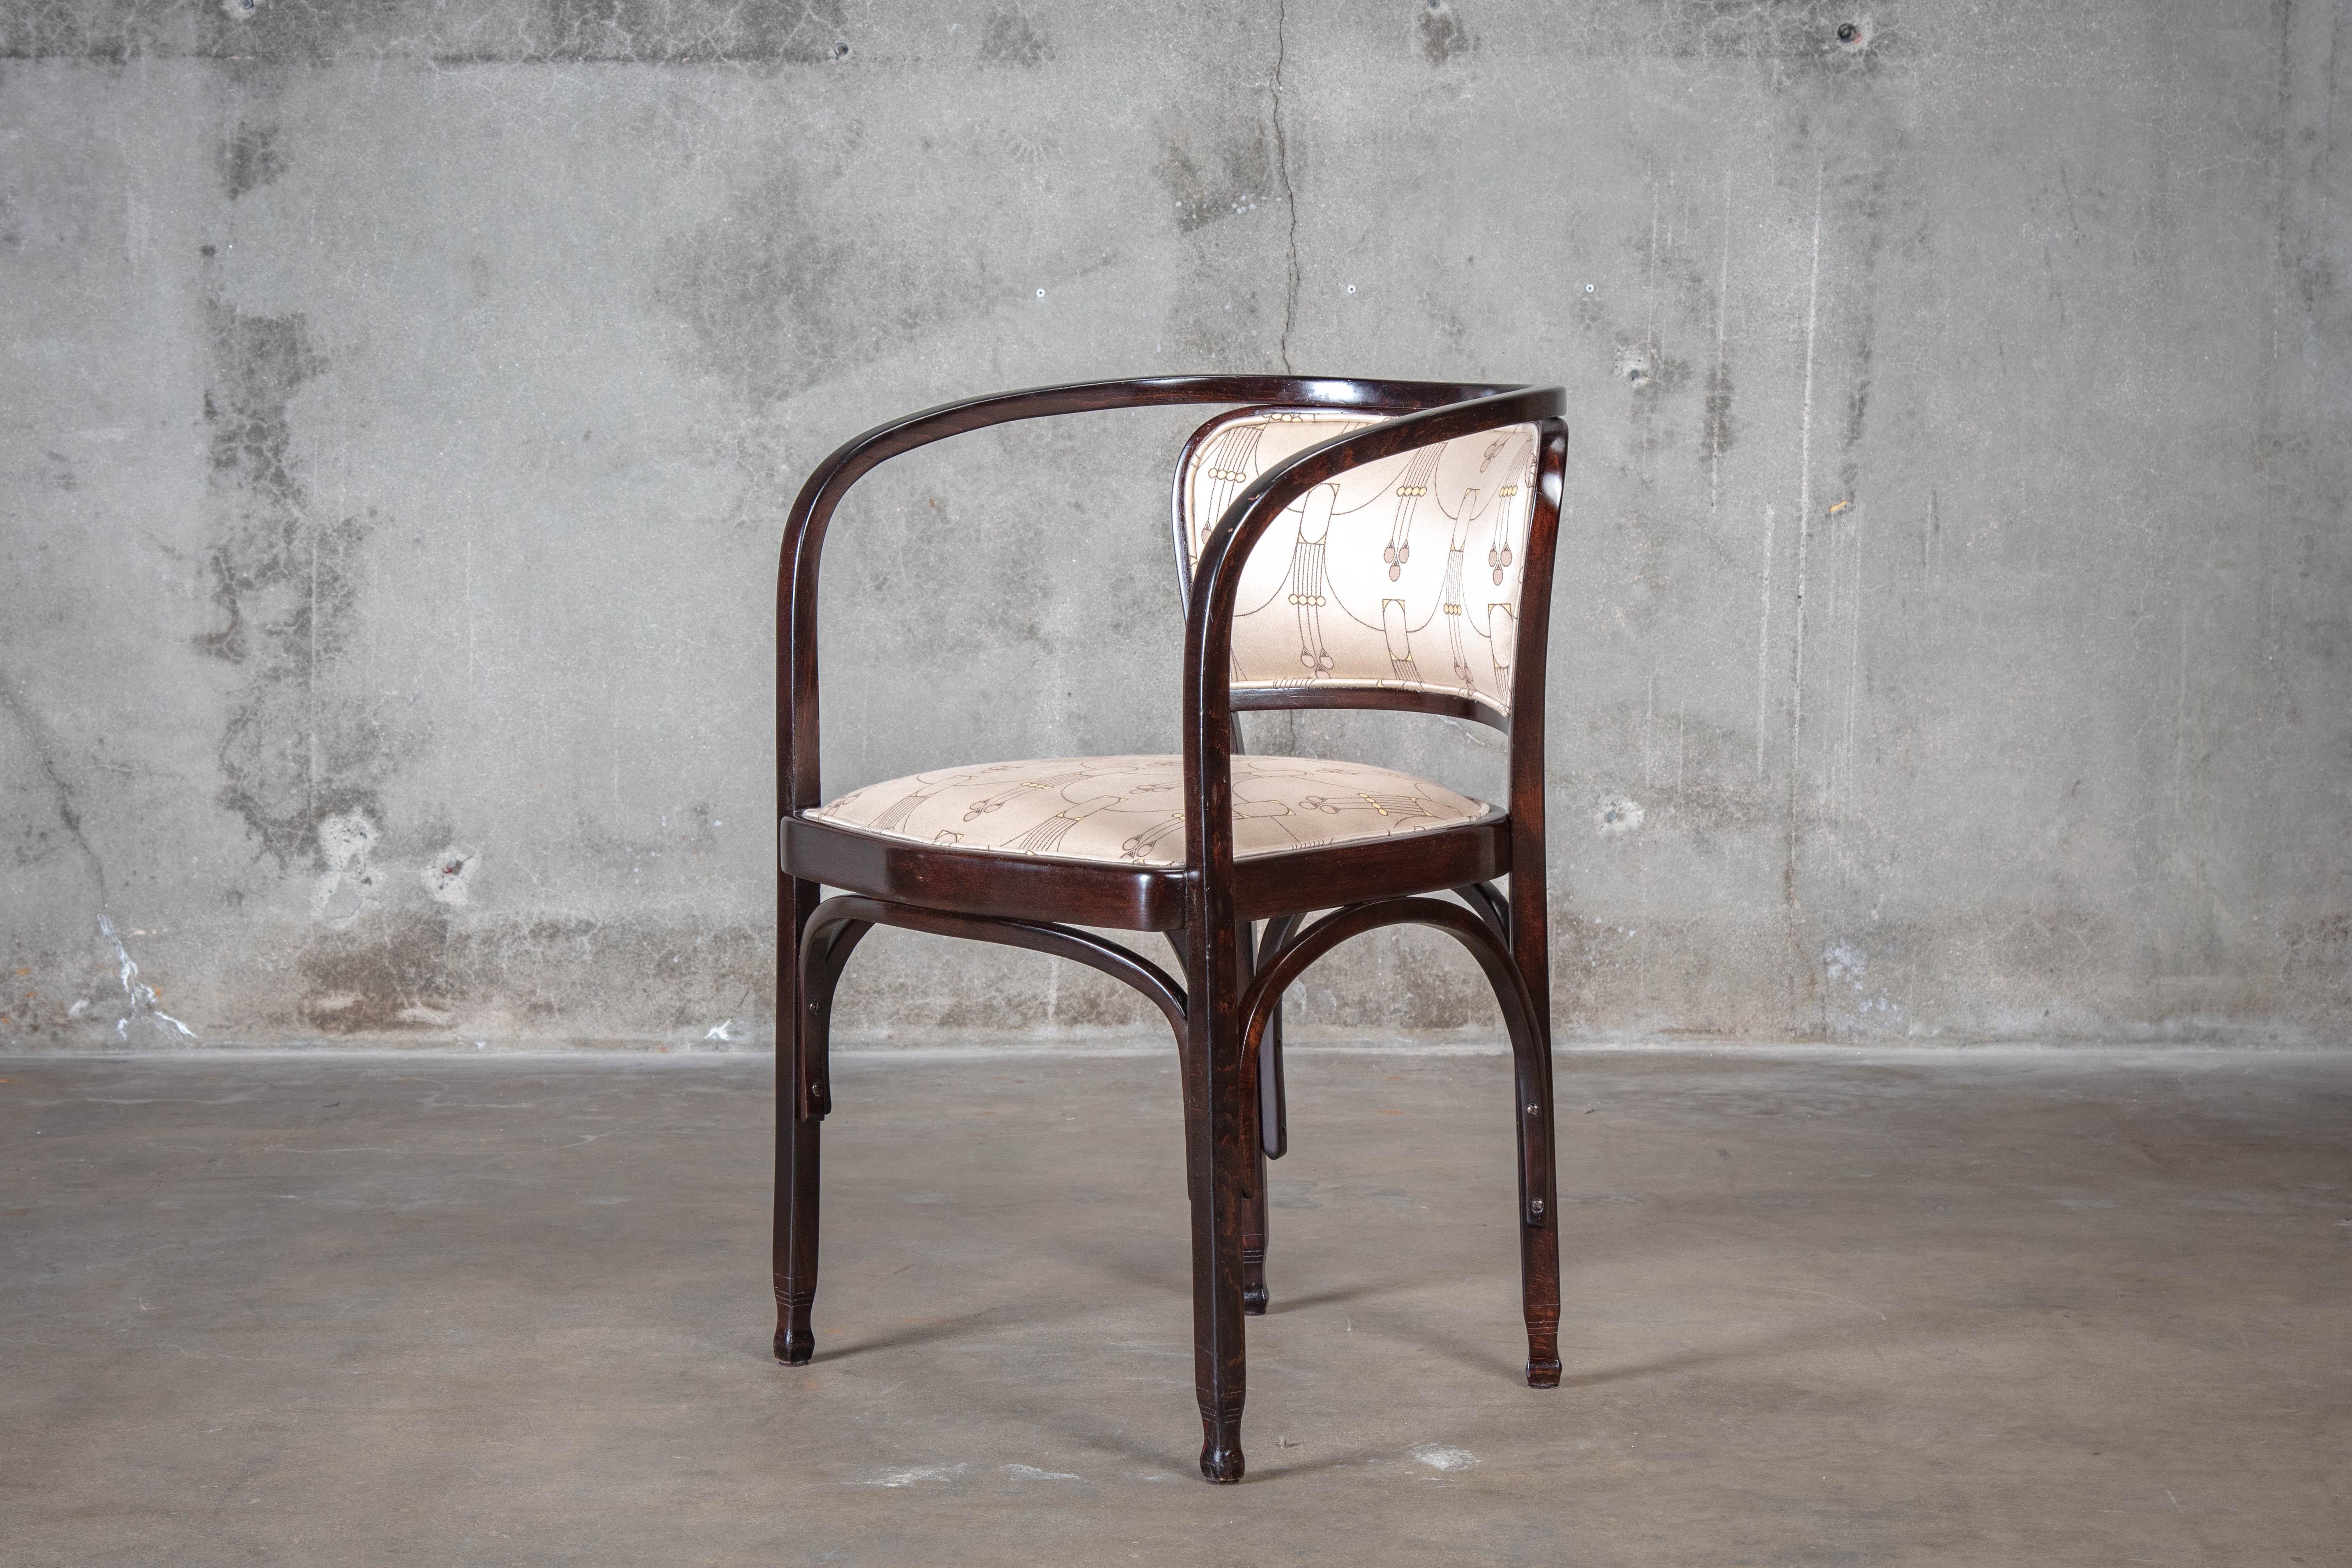 Gustav Siegel (Austrian, 1880-1970) for J&J Kohn Austria armchair

Measures: Seat height 18 inches
Arm height 28 inches.